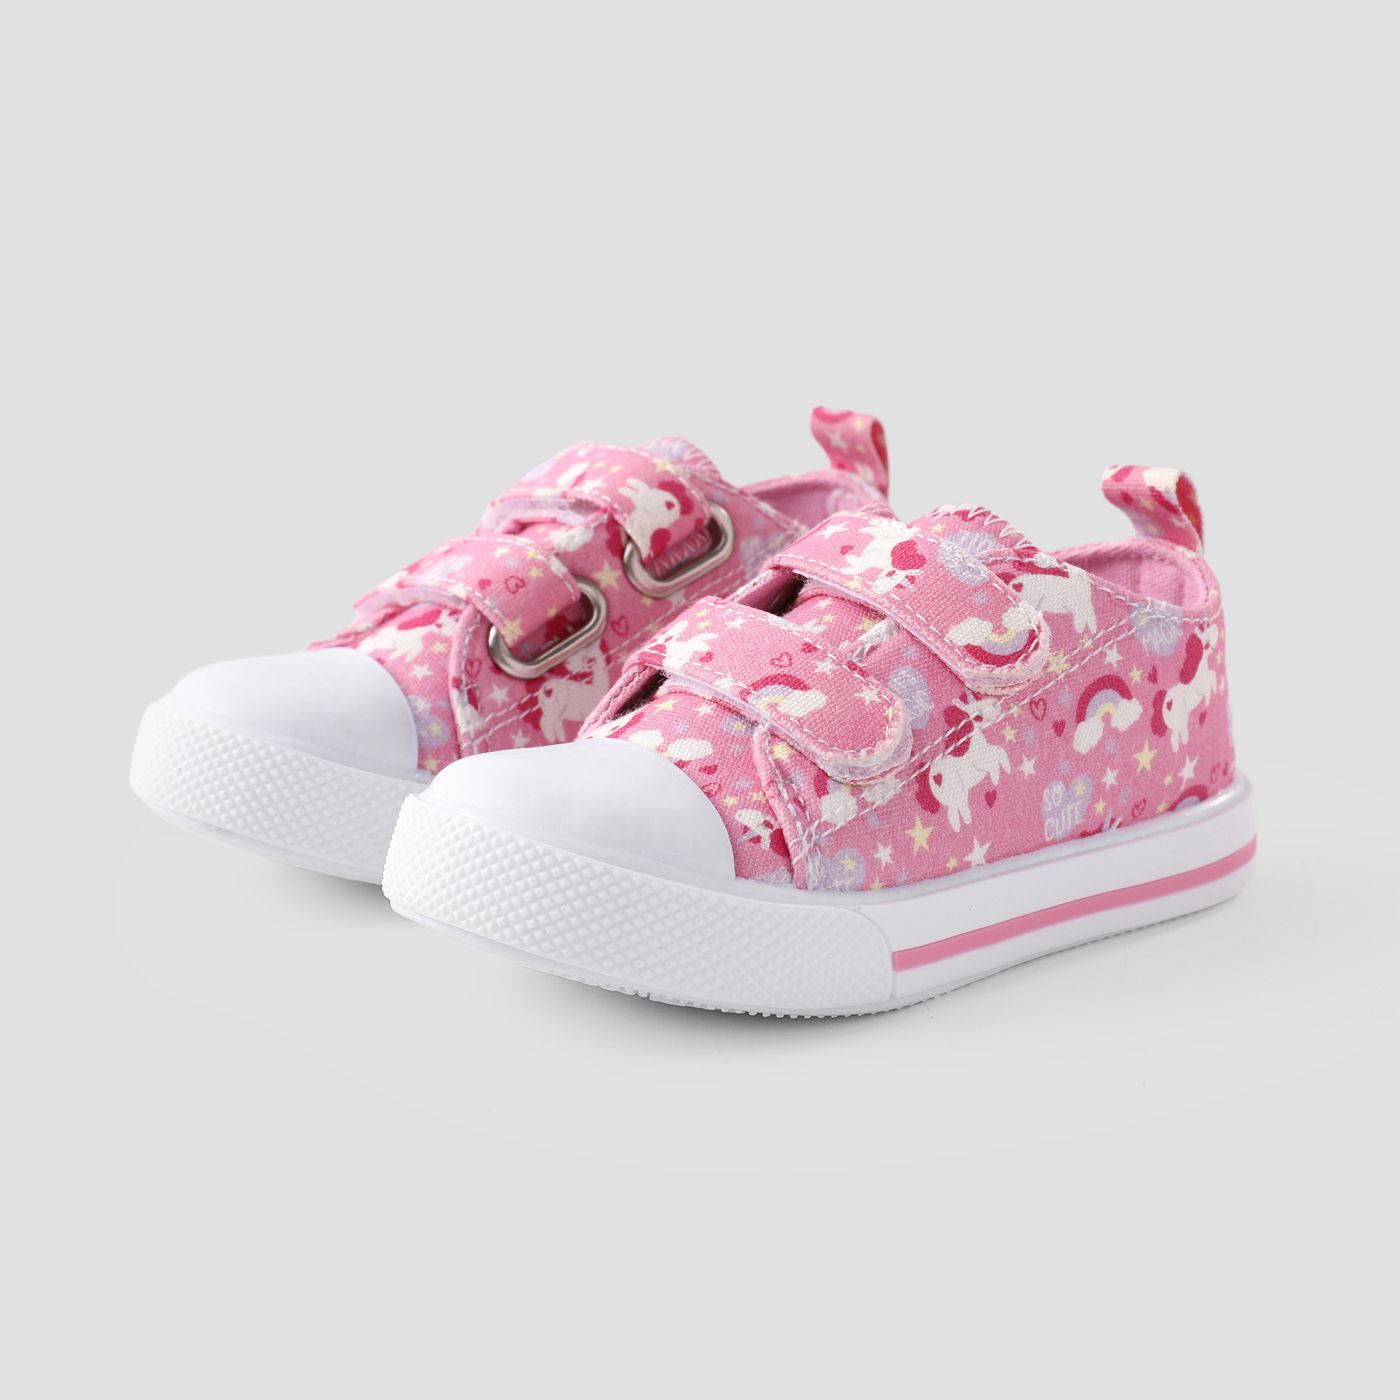 Toddler & Kids Girl's Childlike Cartoon Animal Unicorn & Stars Print Casual Shoes